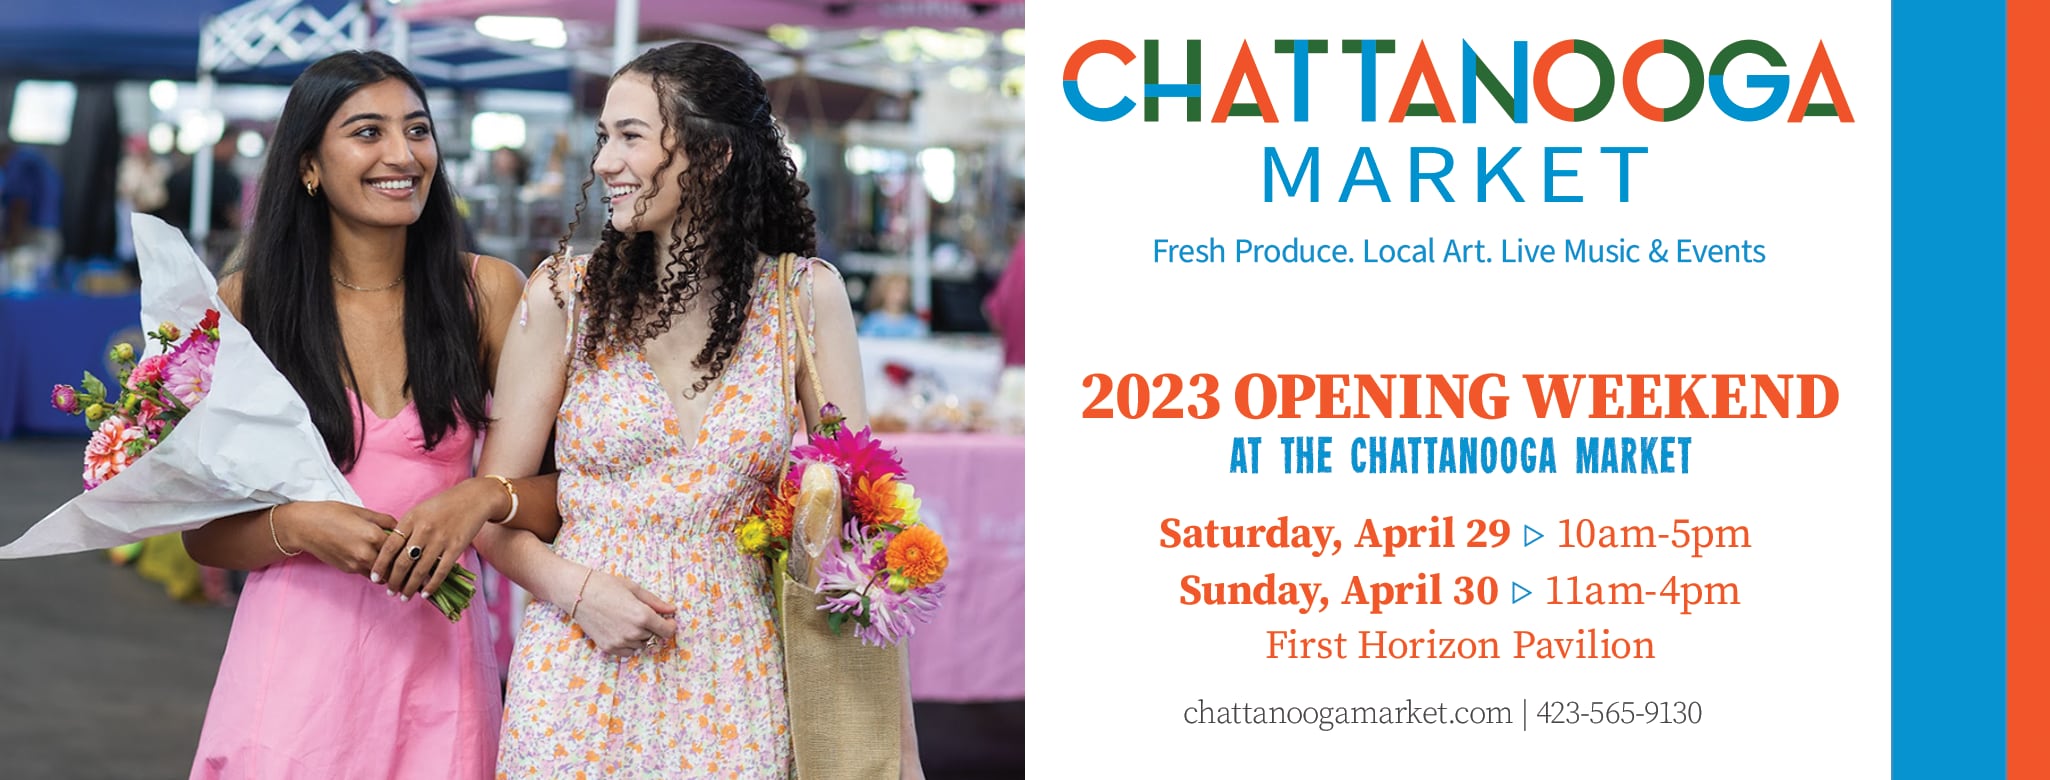 Chattanooga Market Opening Weekend 2023